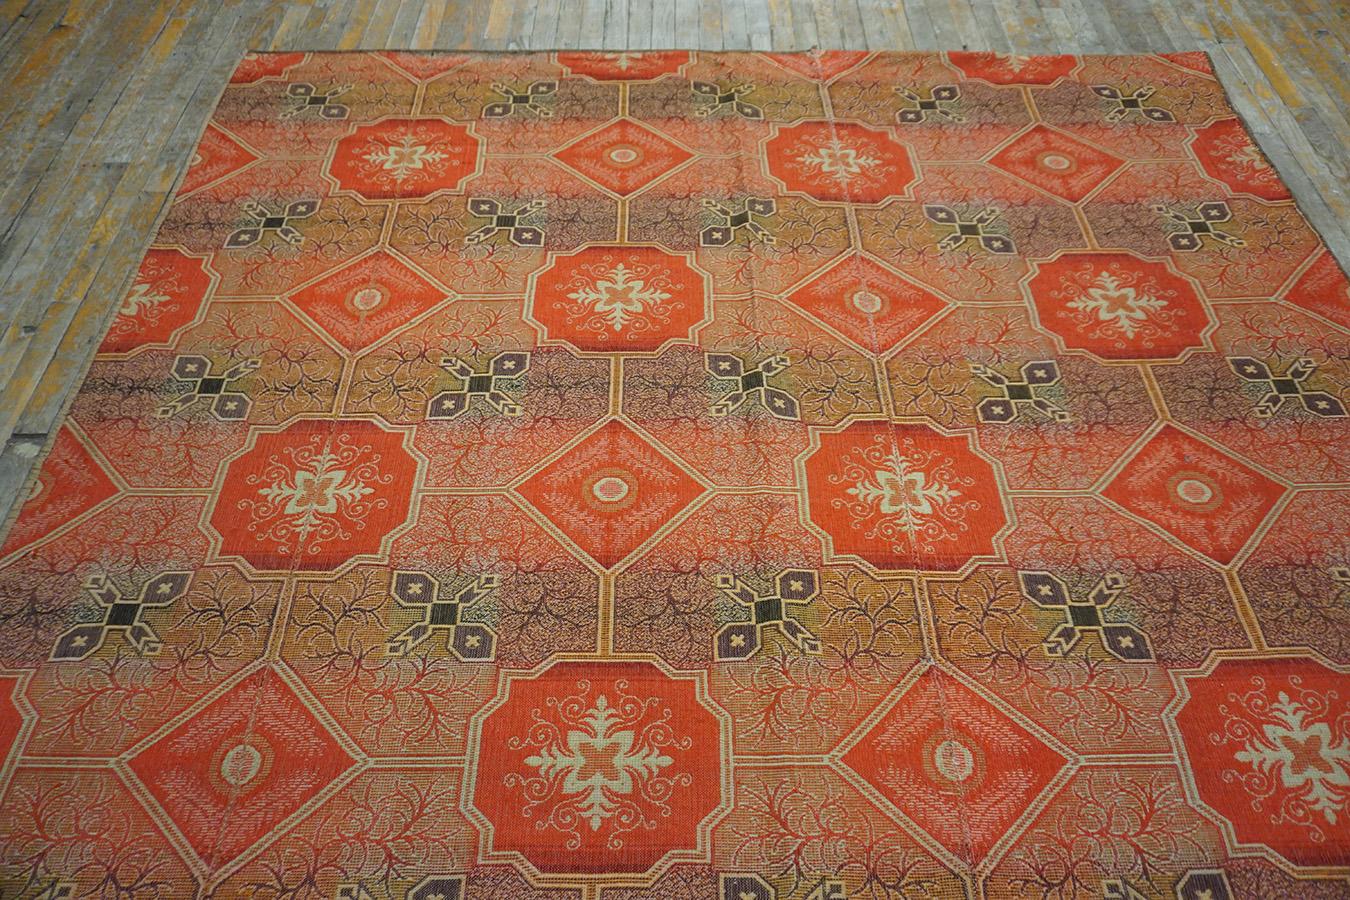 Hand-Woven 19th Century American Ingrain Carpet ( 7'7